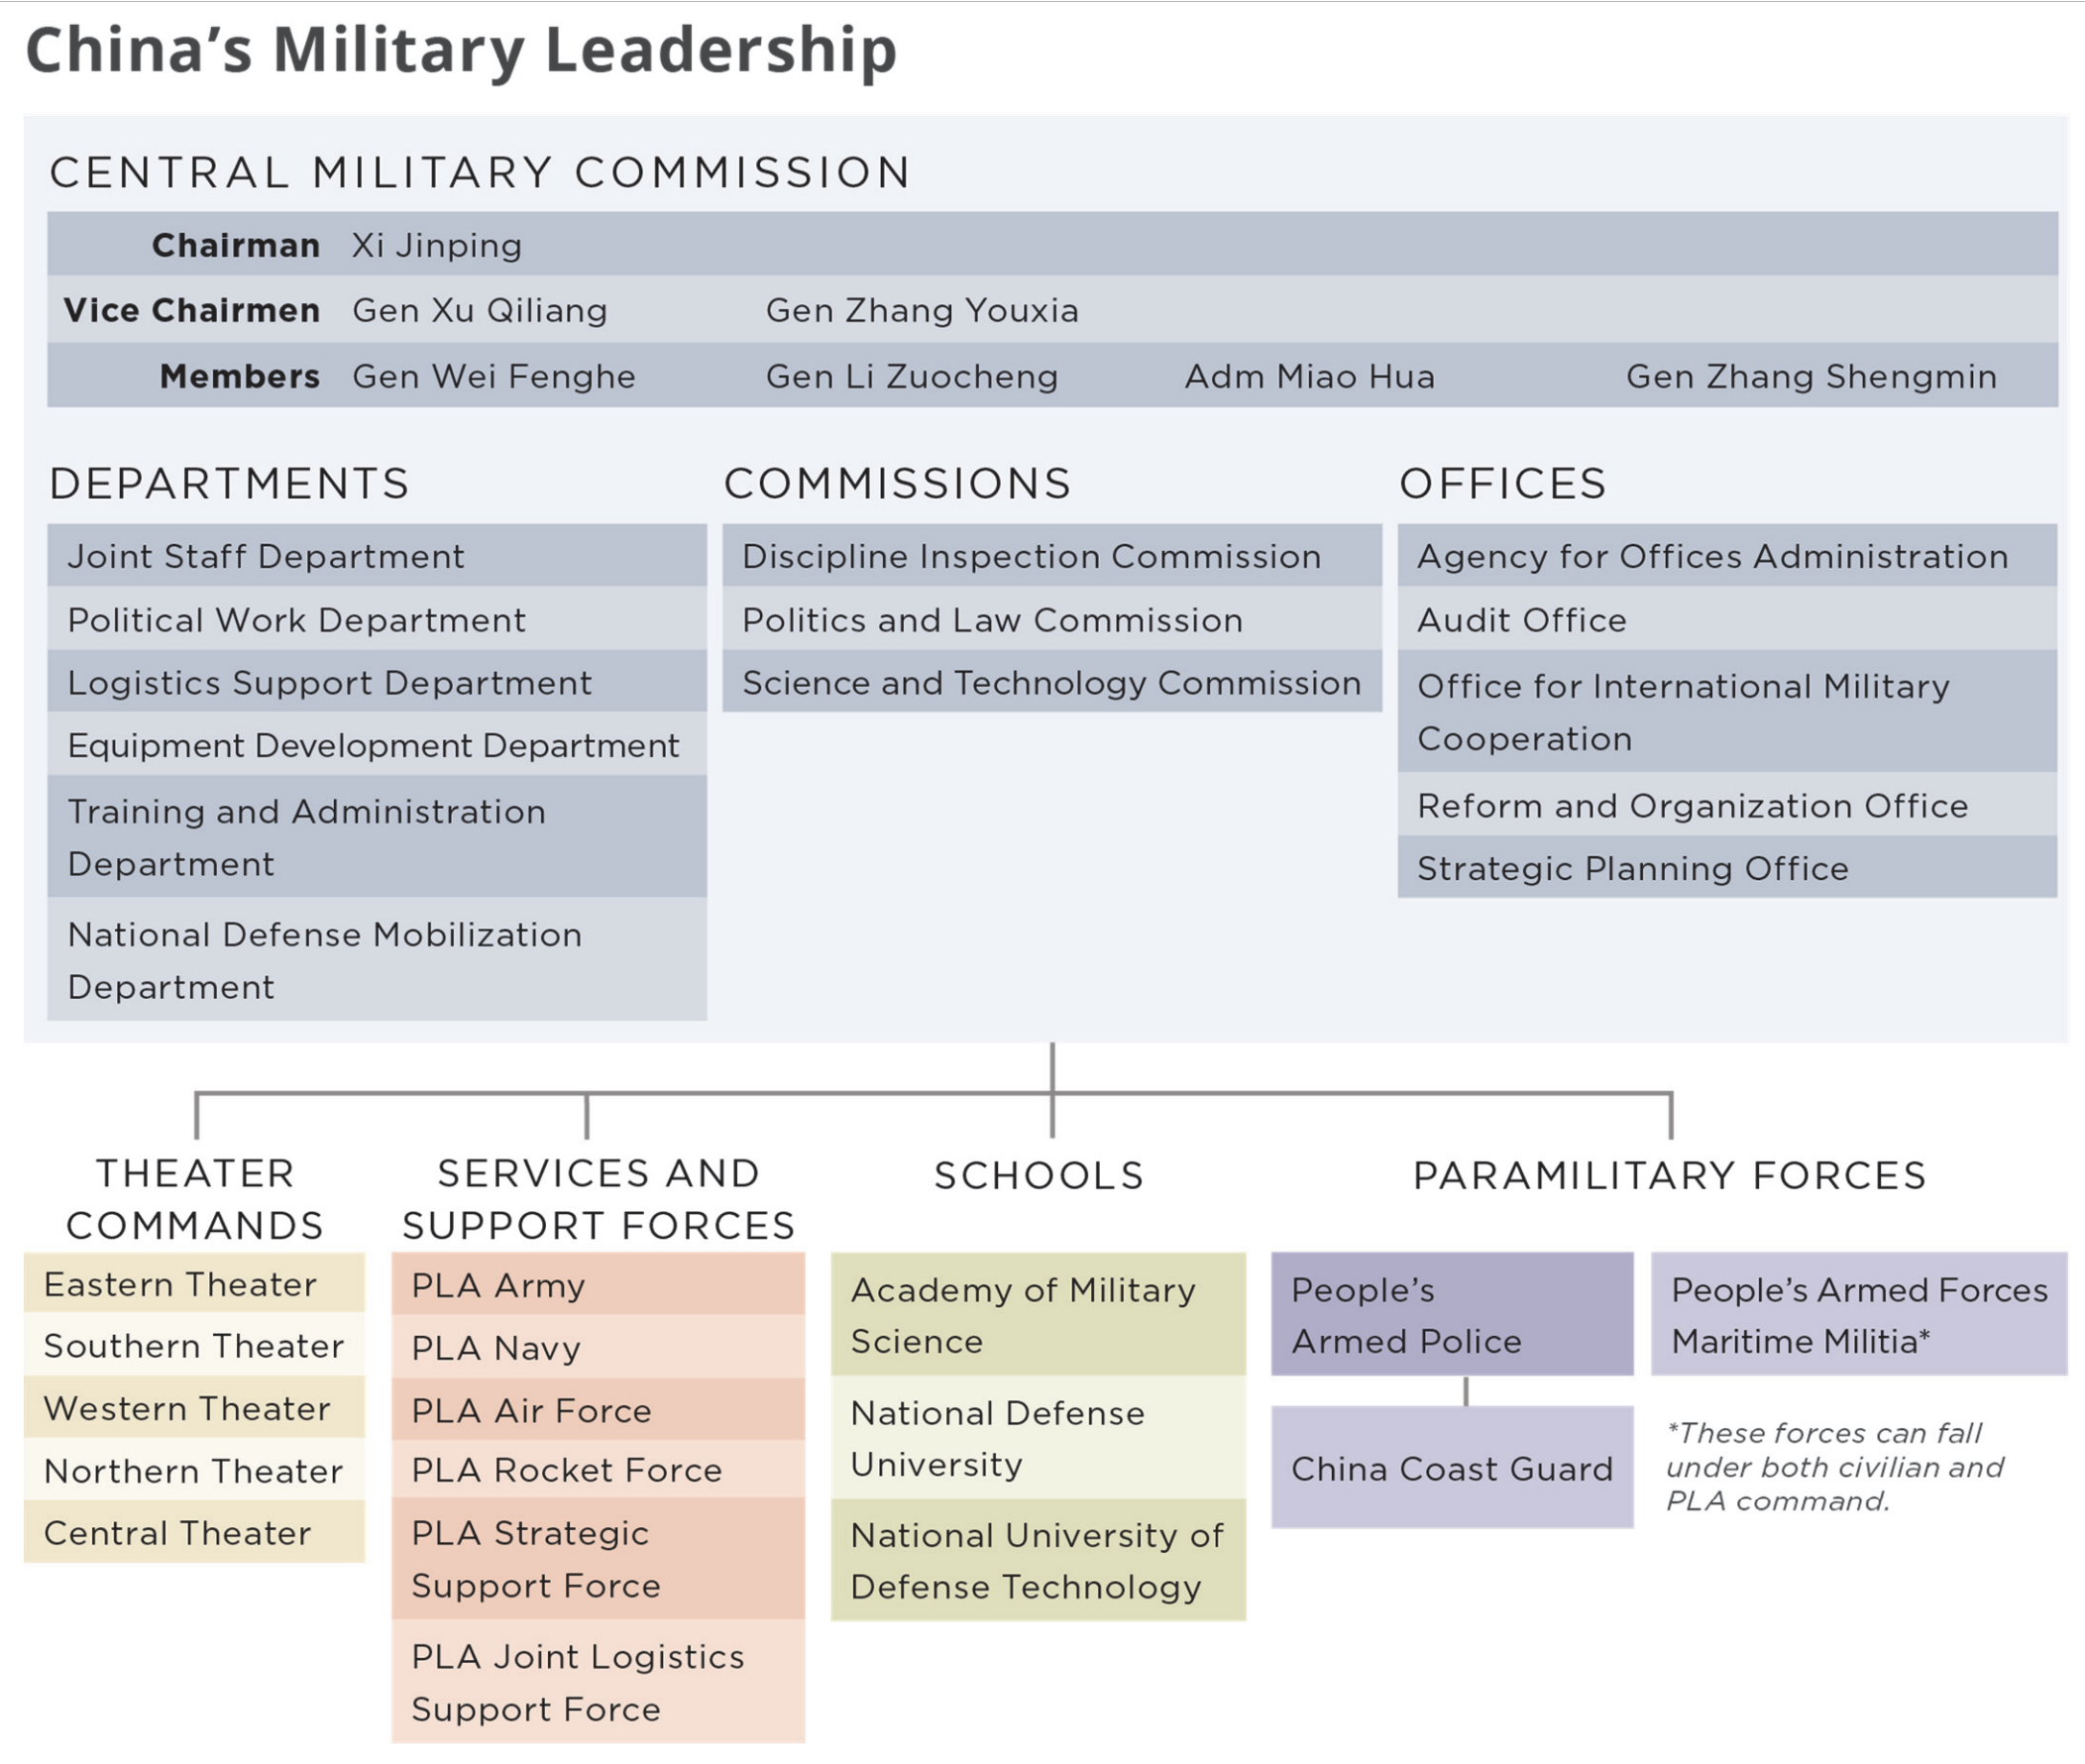 Mod Iss Organisation Chart